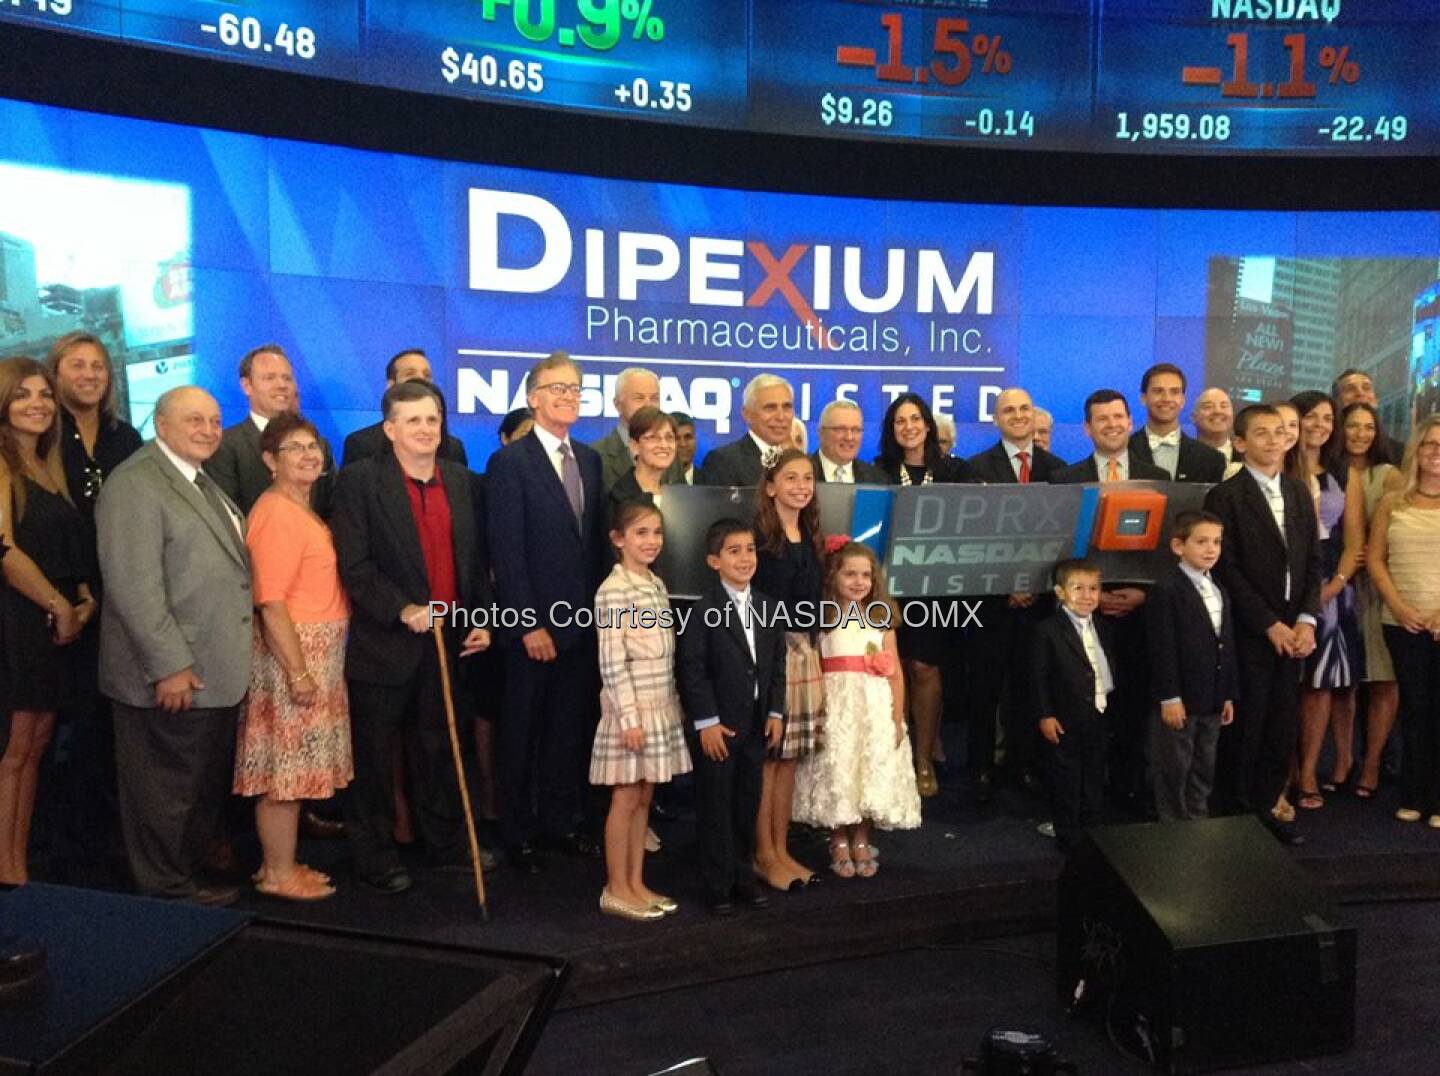 Dipexium Pharmaceuticals, Inc. (and family members!) ring the #NASDAQ Closing Bell! #DreamBIG $DPRX  Source: http://facebook.com/NASDAQ